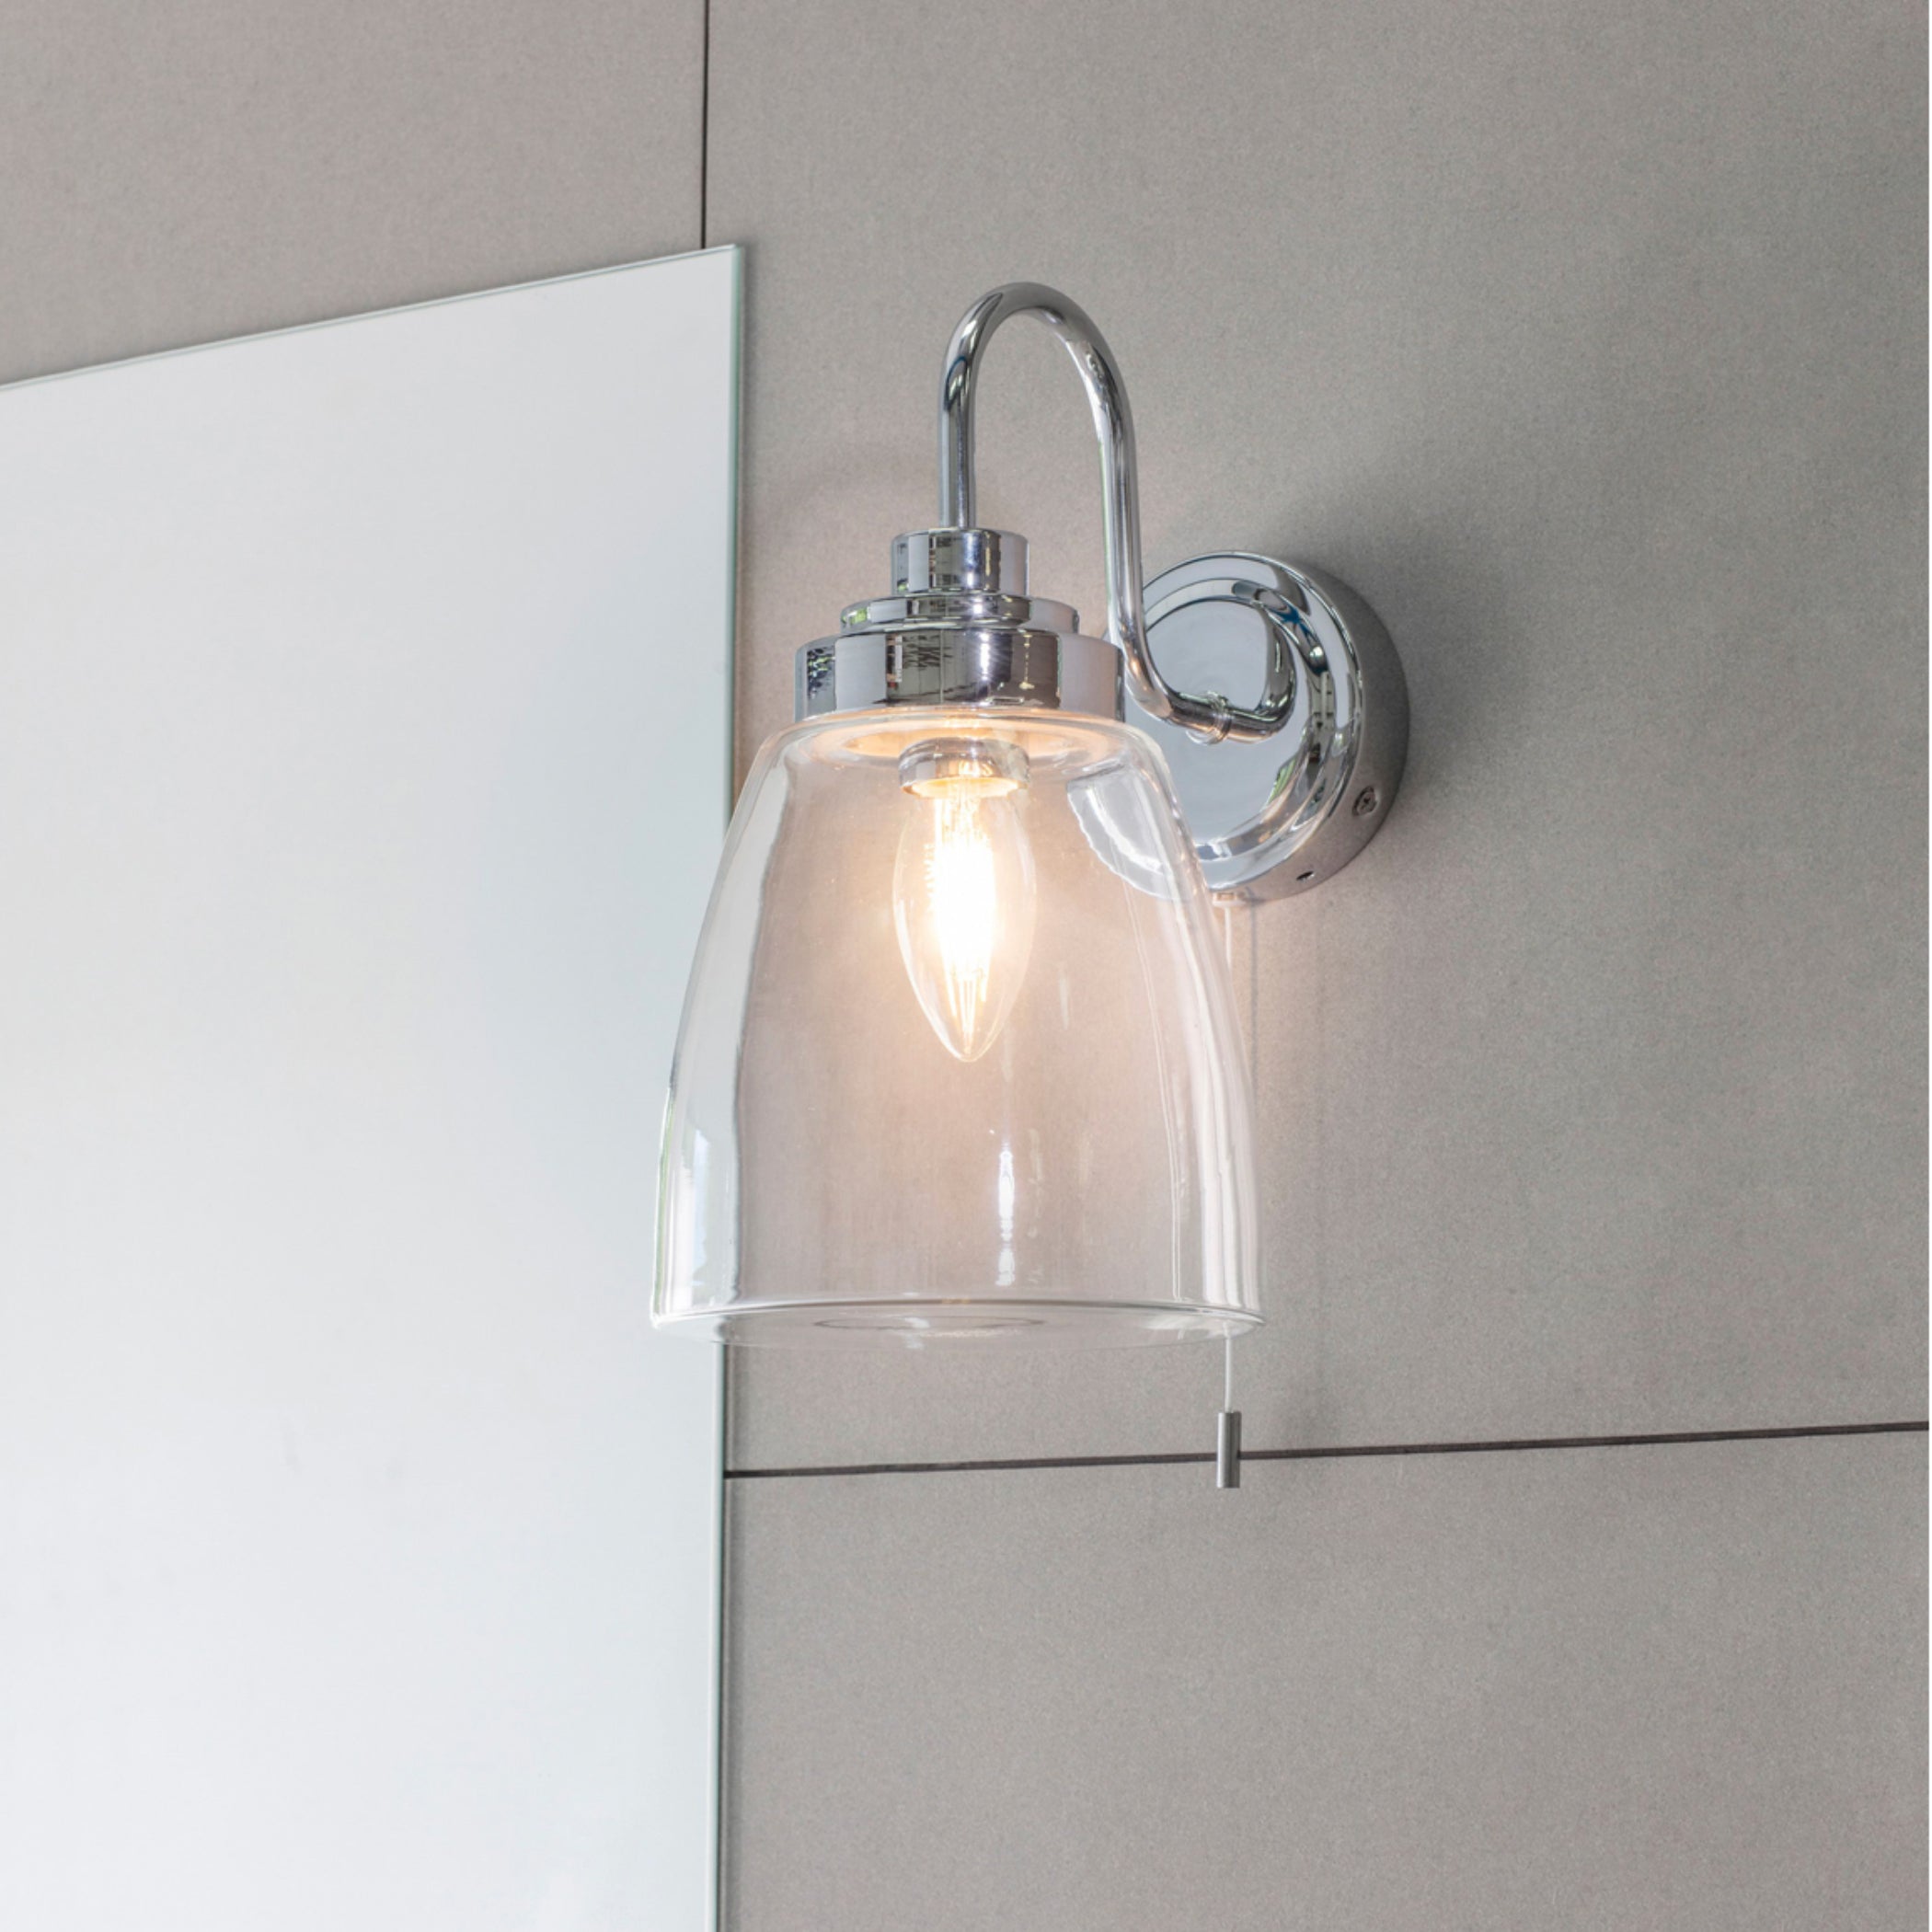 Chrome and Clear Glass Shade Bathroom Wall Light 3